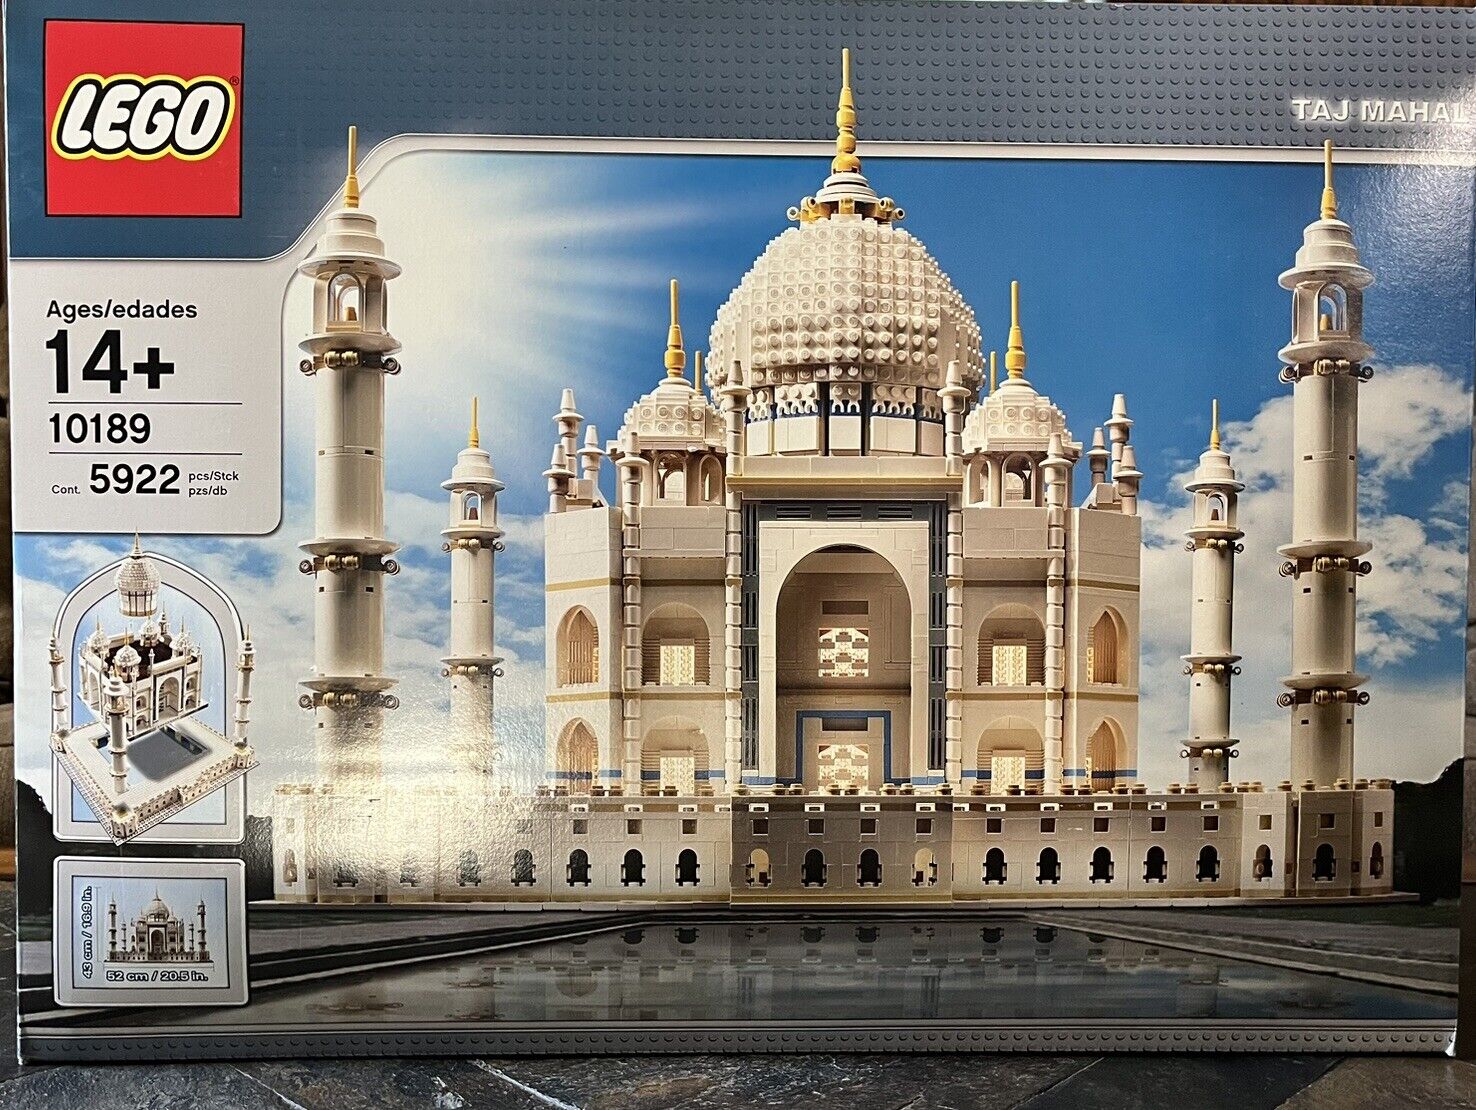 LEGO Advanced Models: Taj Mahal (10189) New in factory-sealed box!